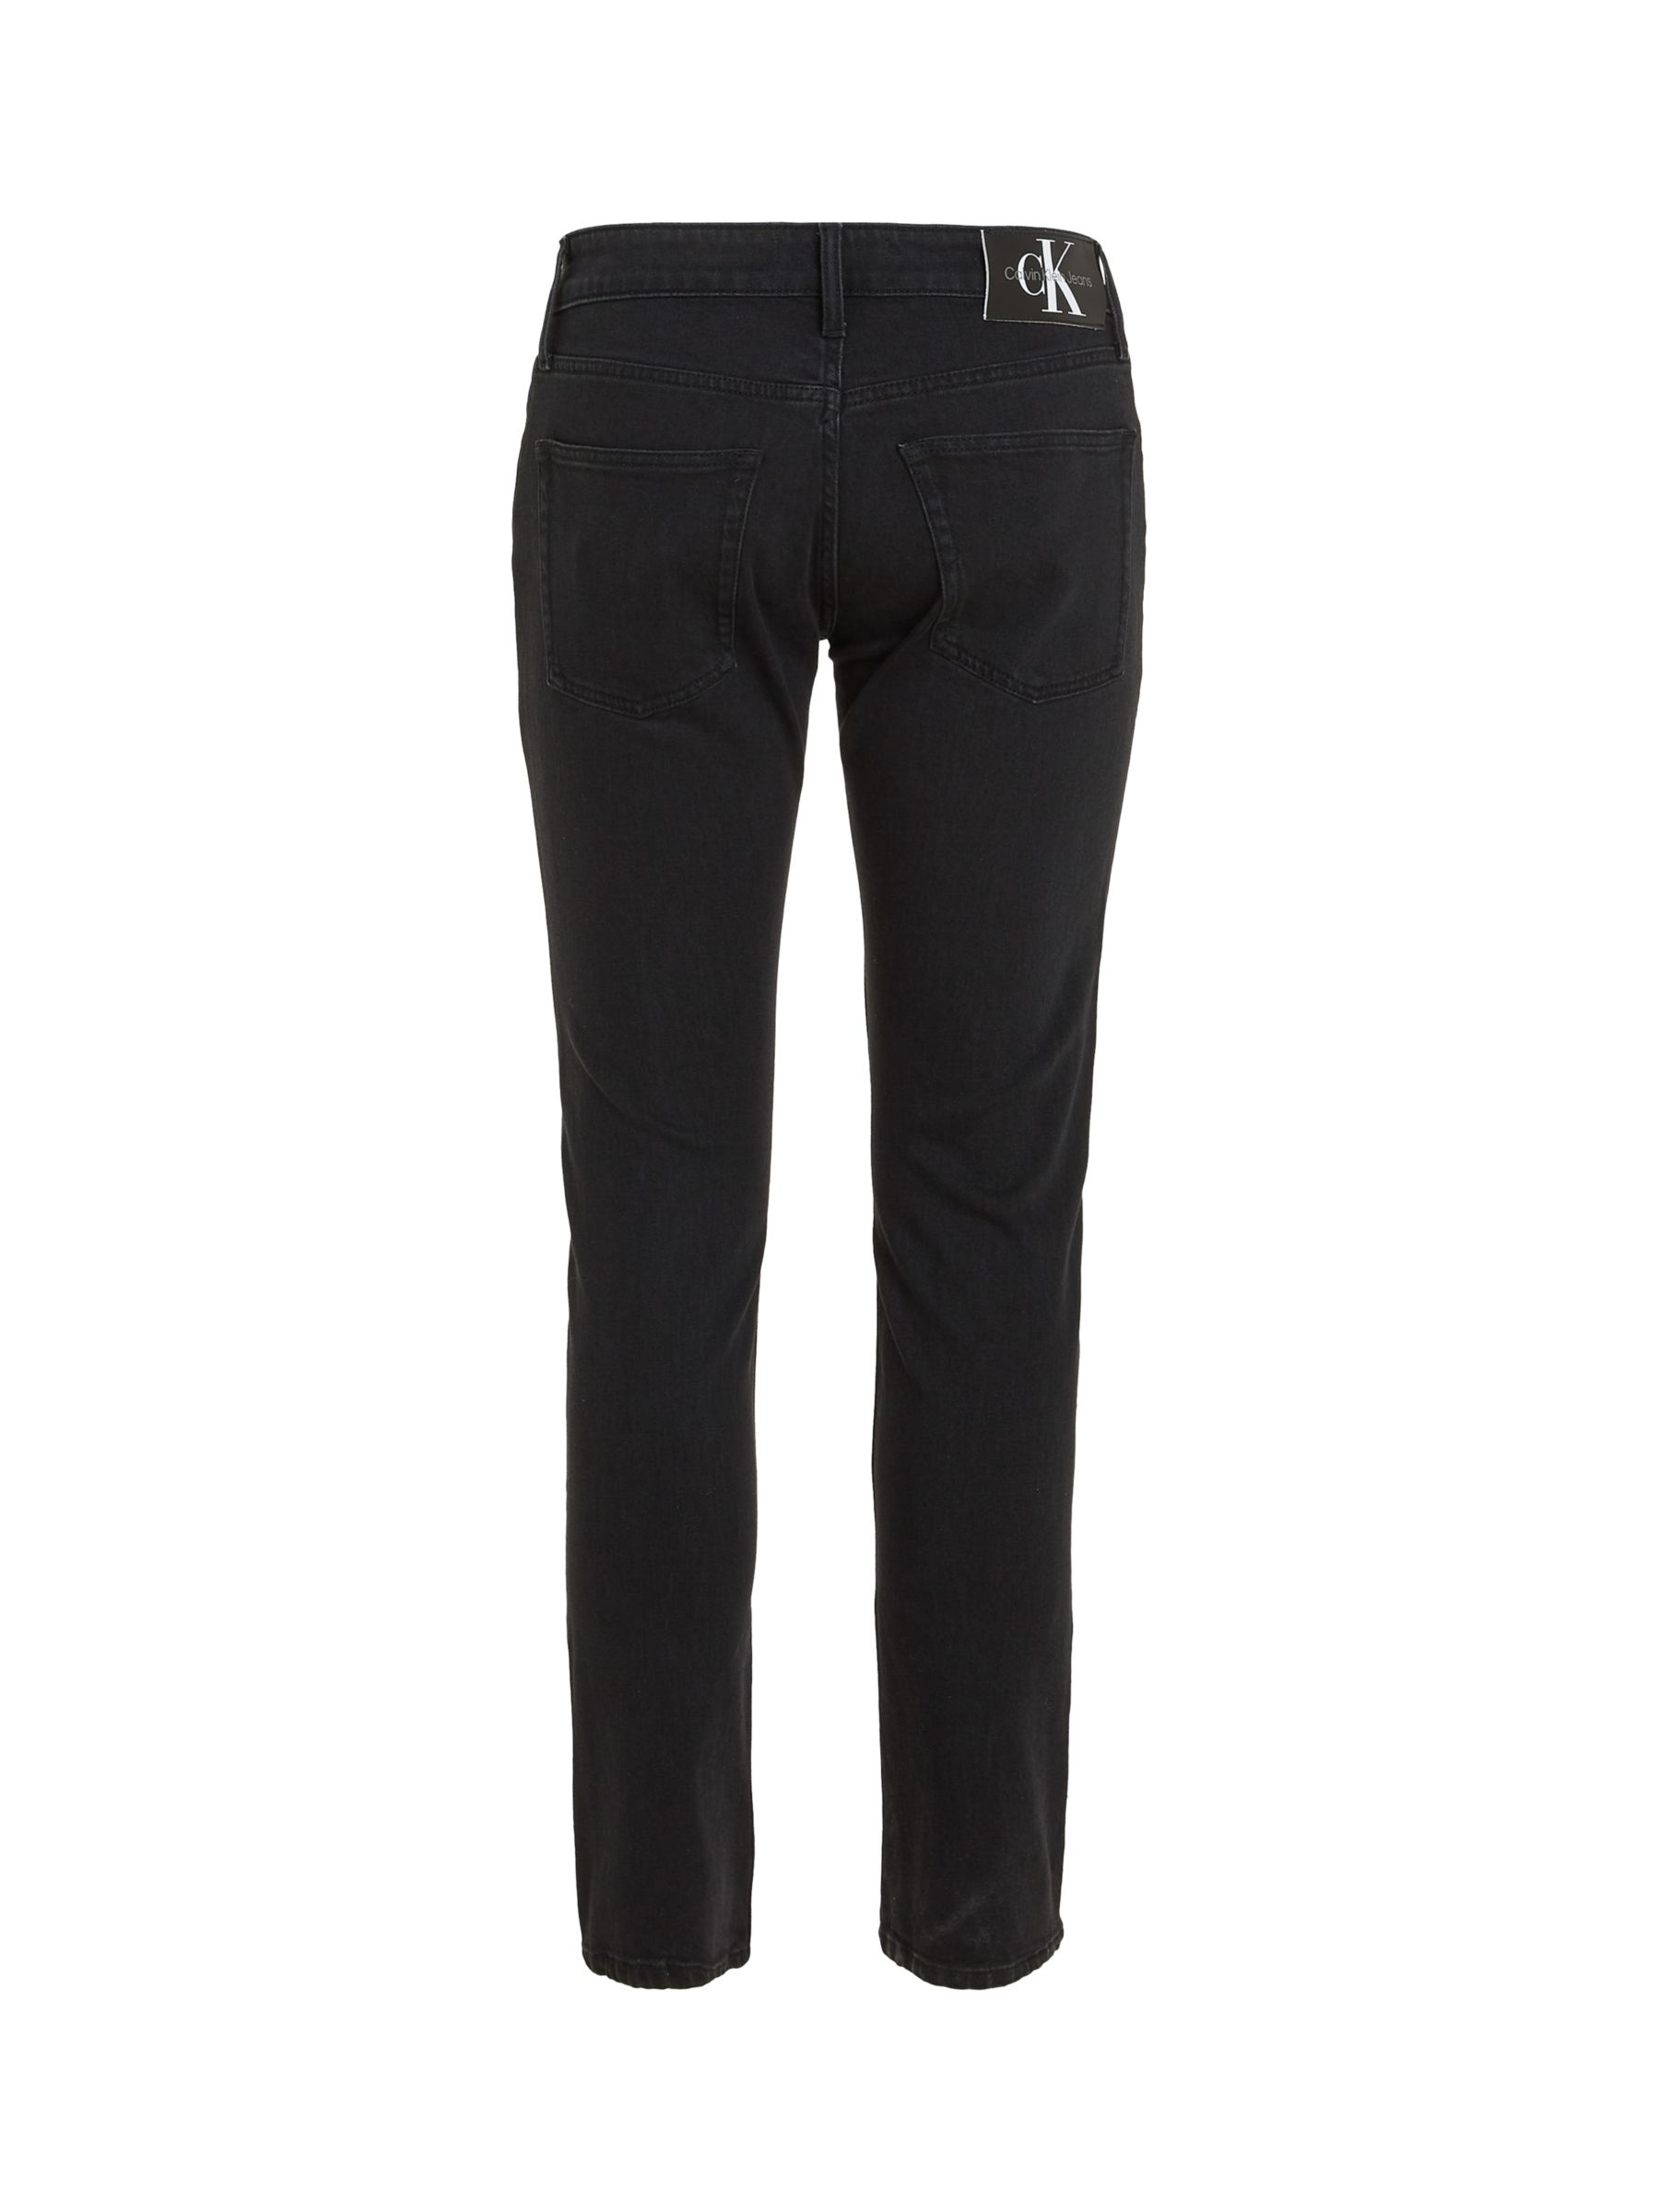 Calvin Klein Slim Fit Jeans, Denim Black, 32S